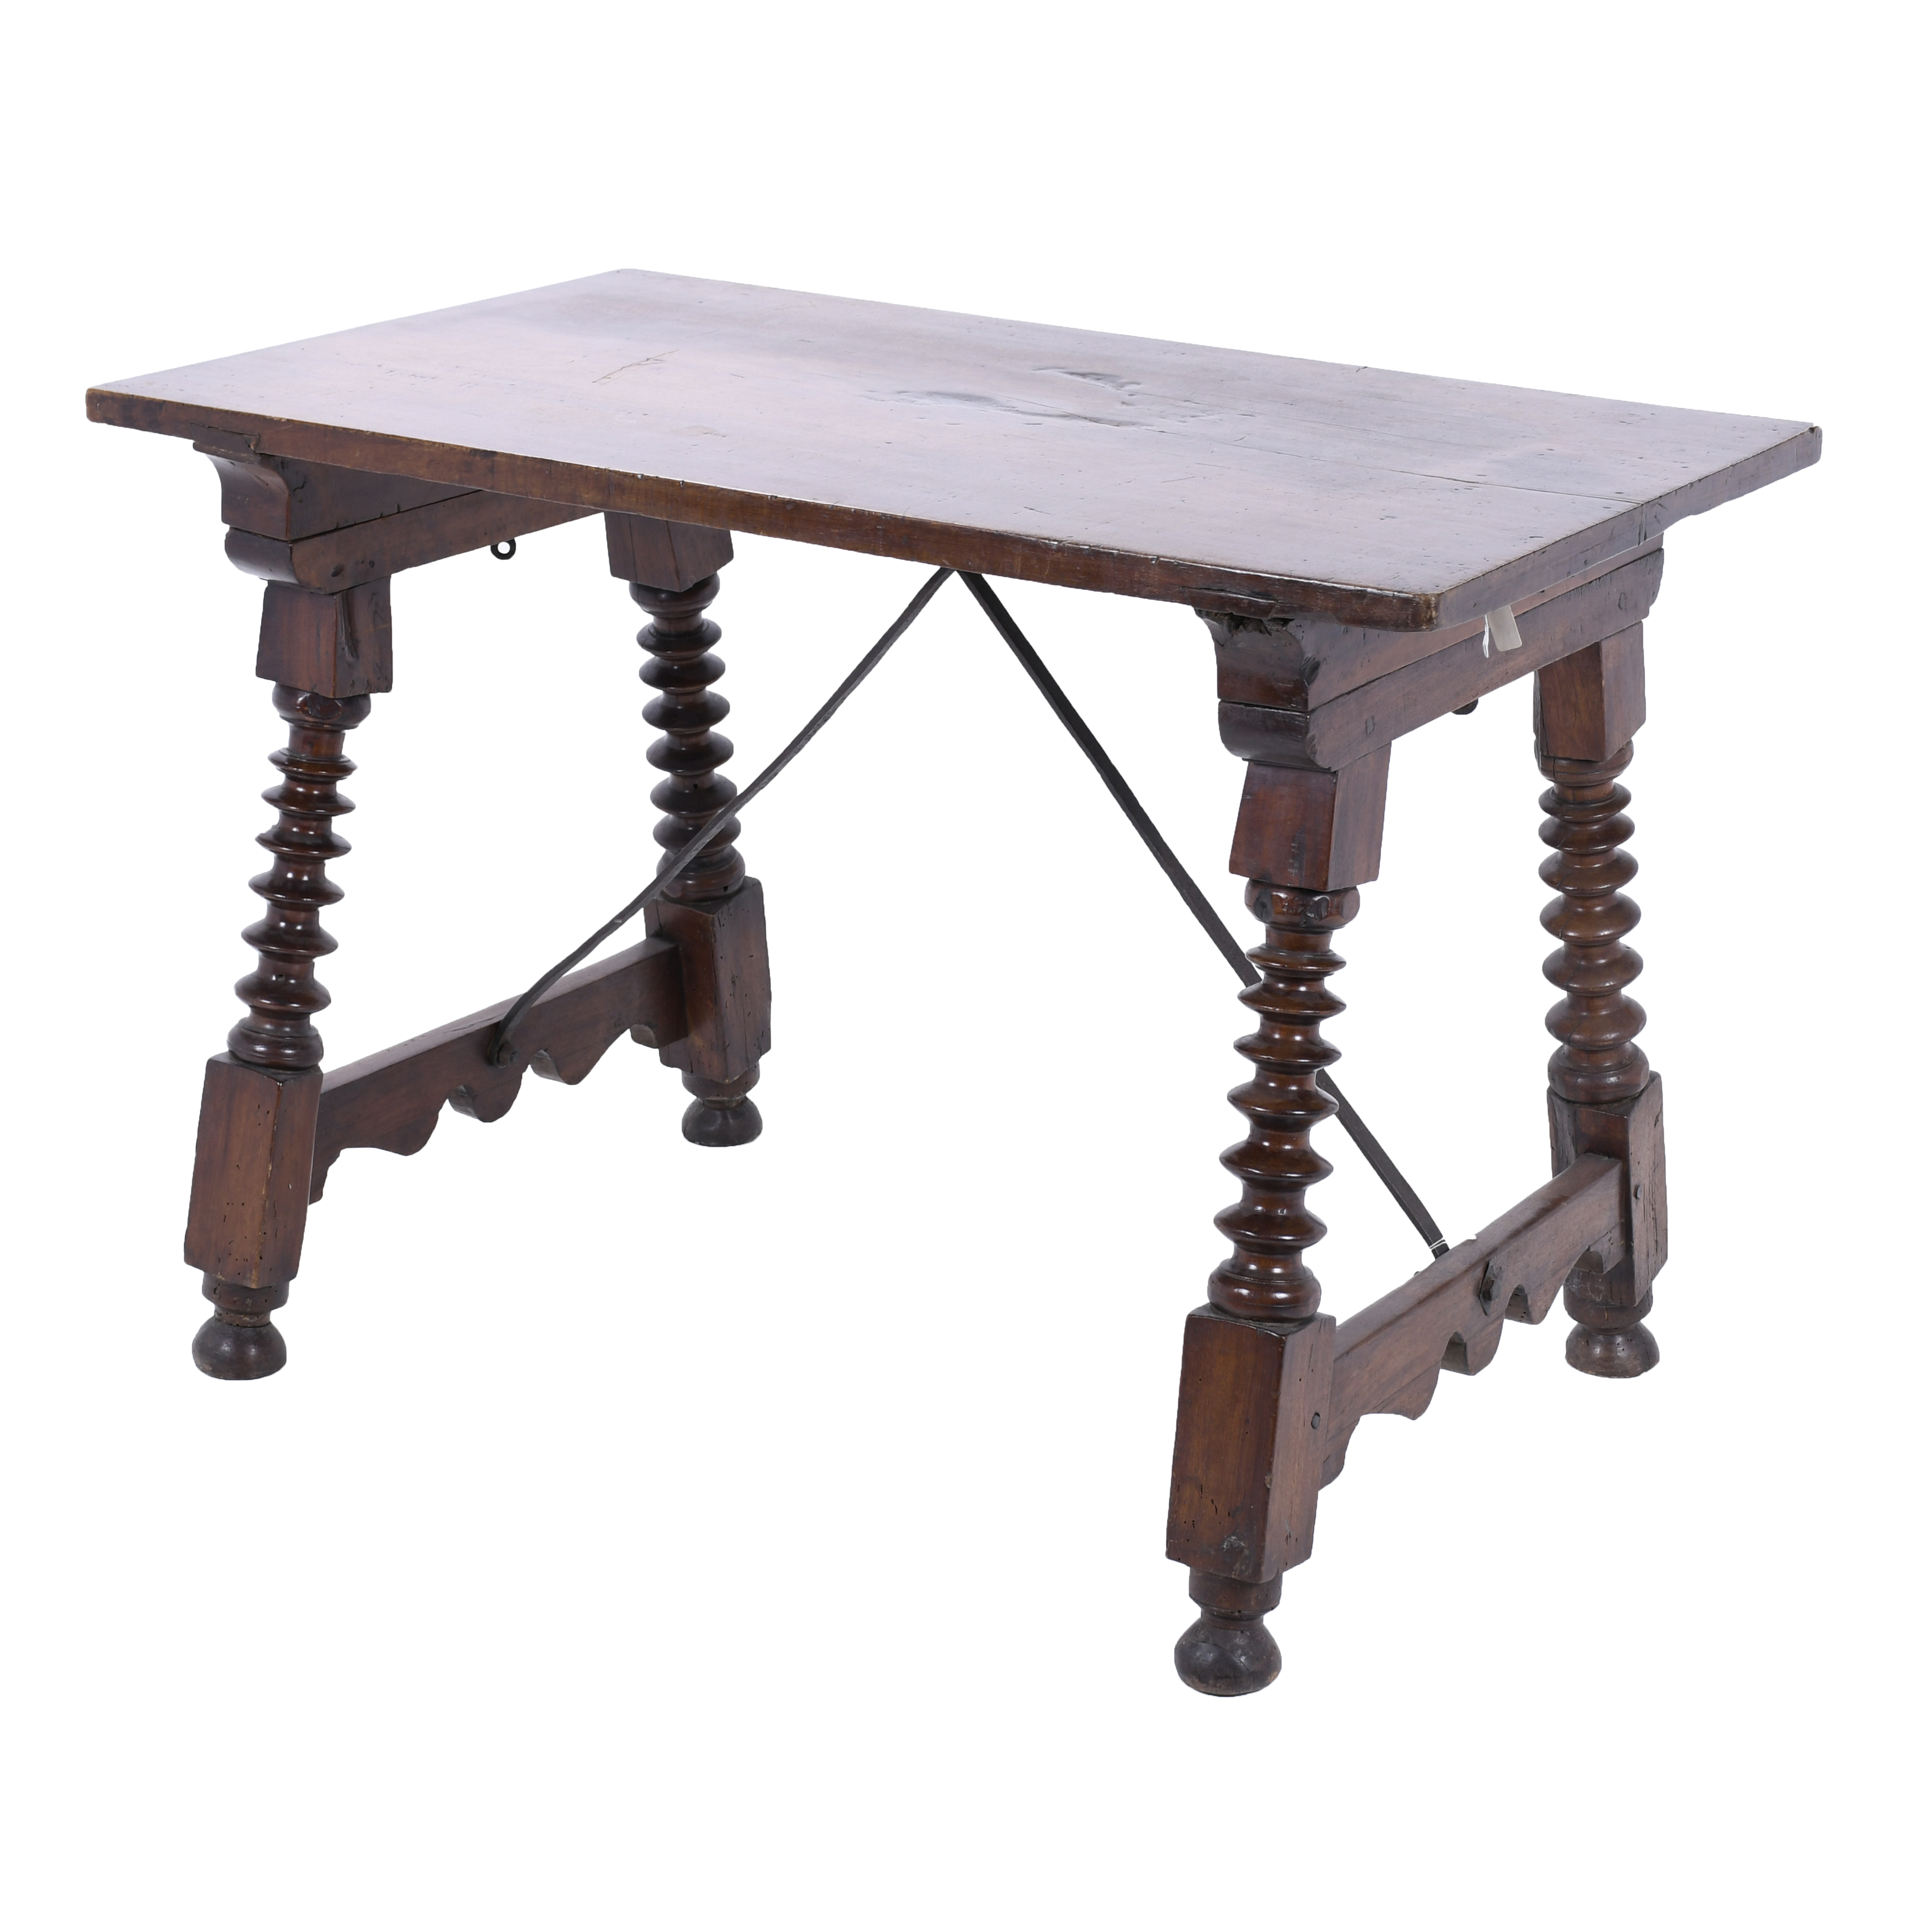 CASTILIAN TABLE, 17TH CENTURY.